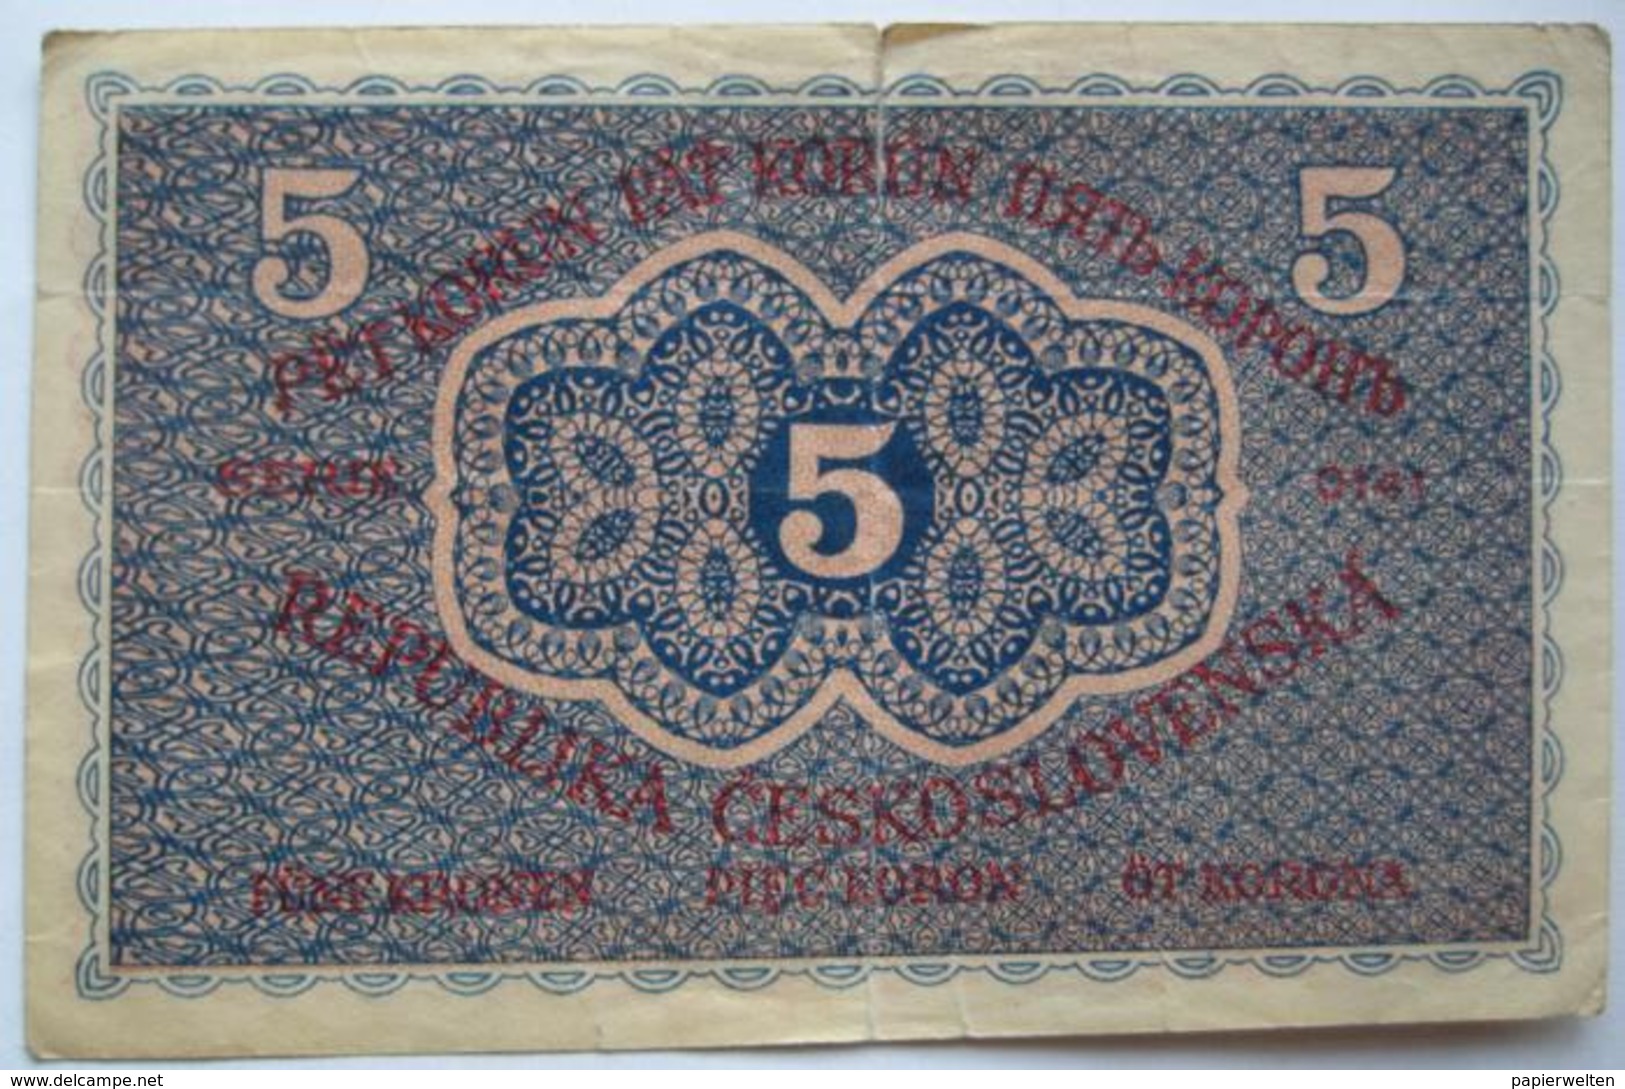 5 Kronen / Pet Korun 1919 (WPM 7) - Czechoslovakia